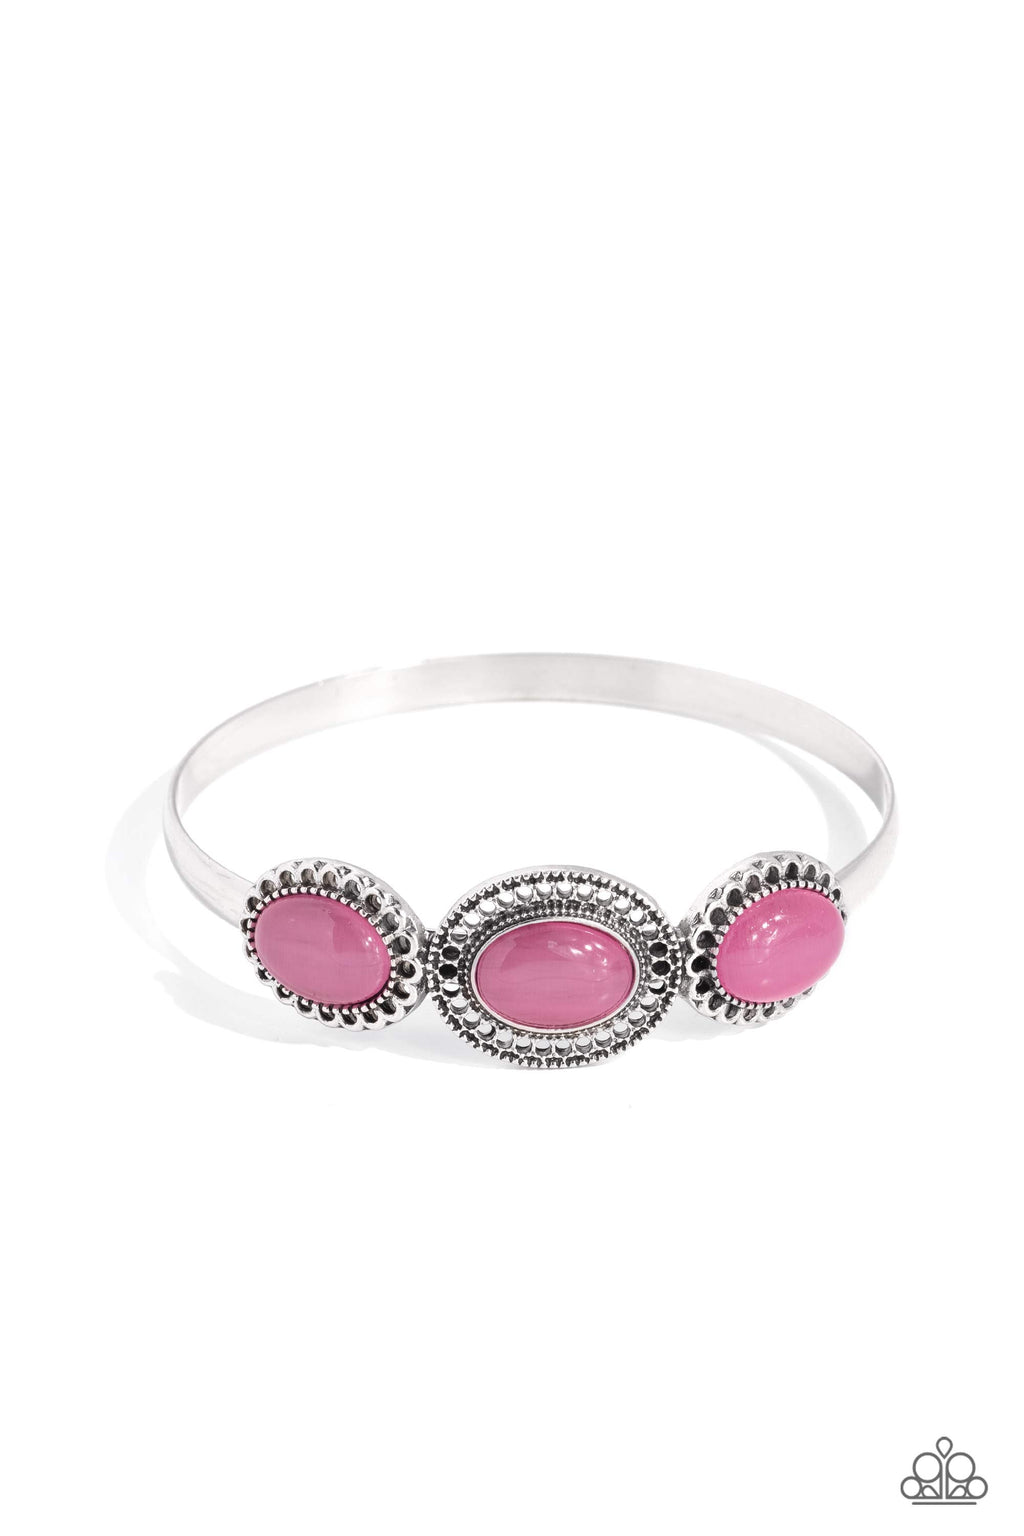 five-dollar-jewelry-a-daydream-come-true-pink-bracelet-paparazzi-accessories